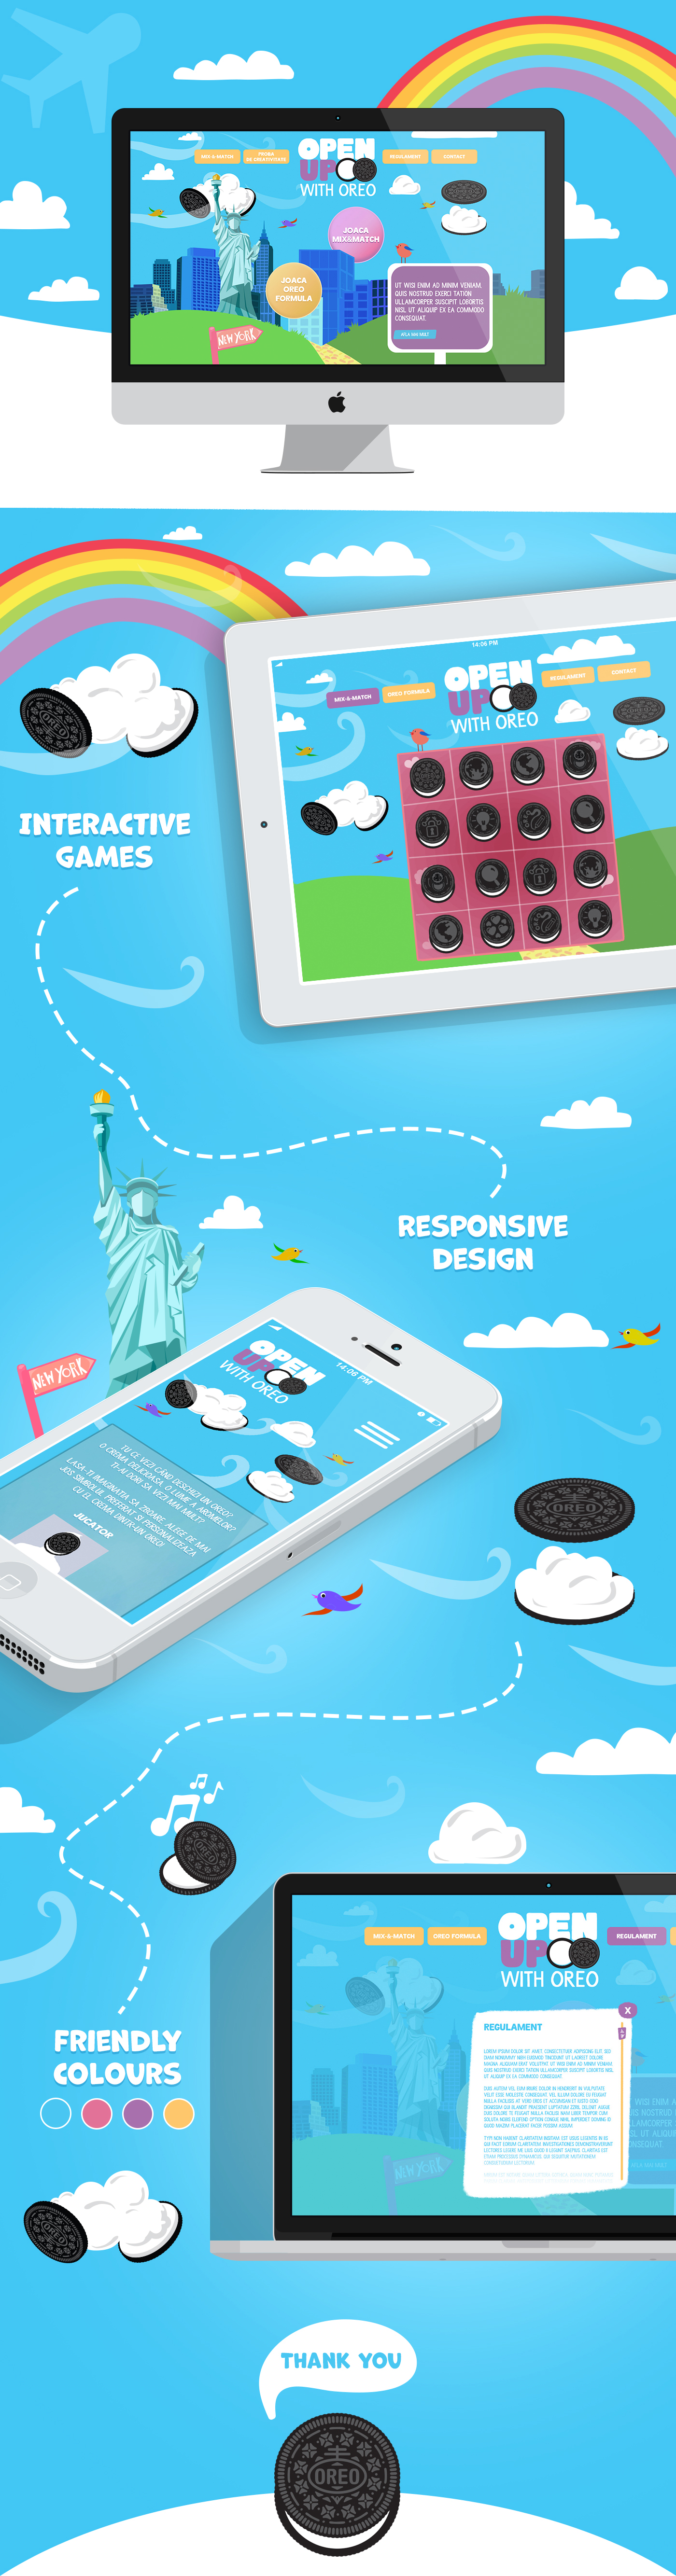 oreo openup biscuit New York rainbow wonderfilled Interactive games friendly UI